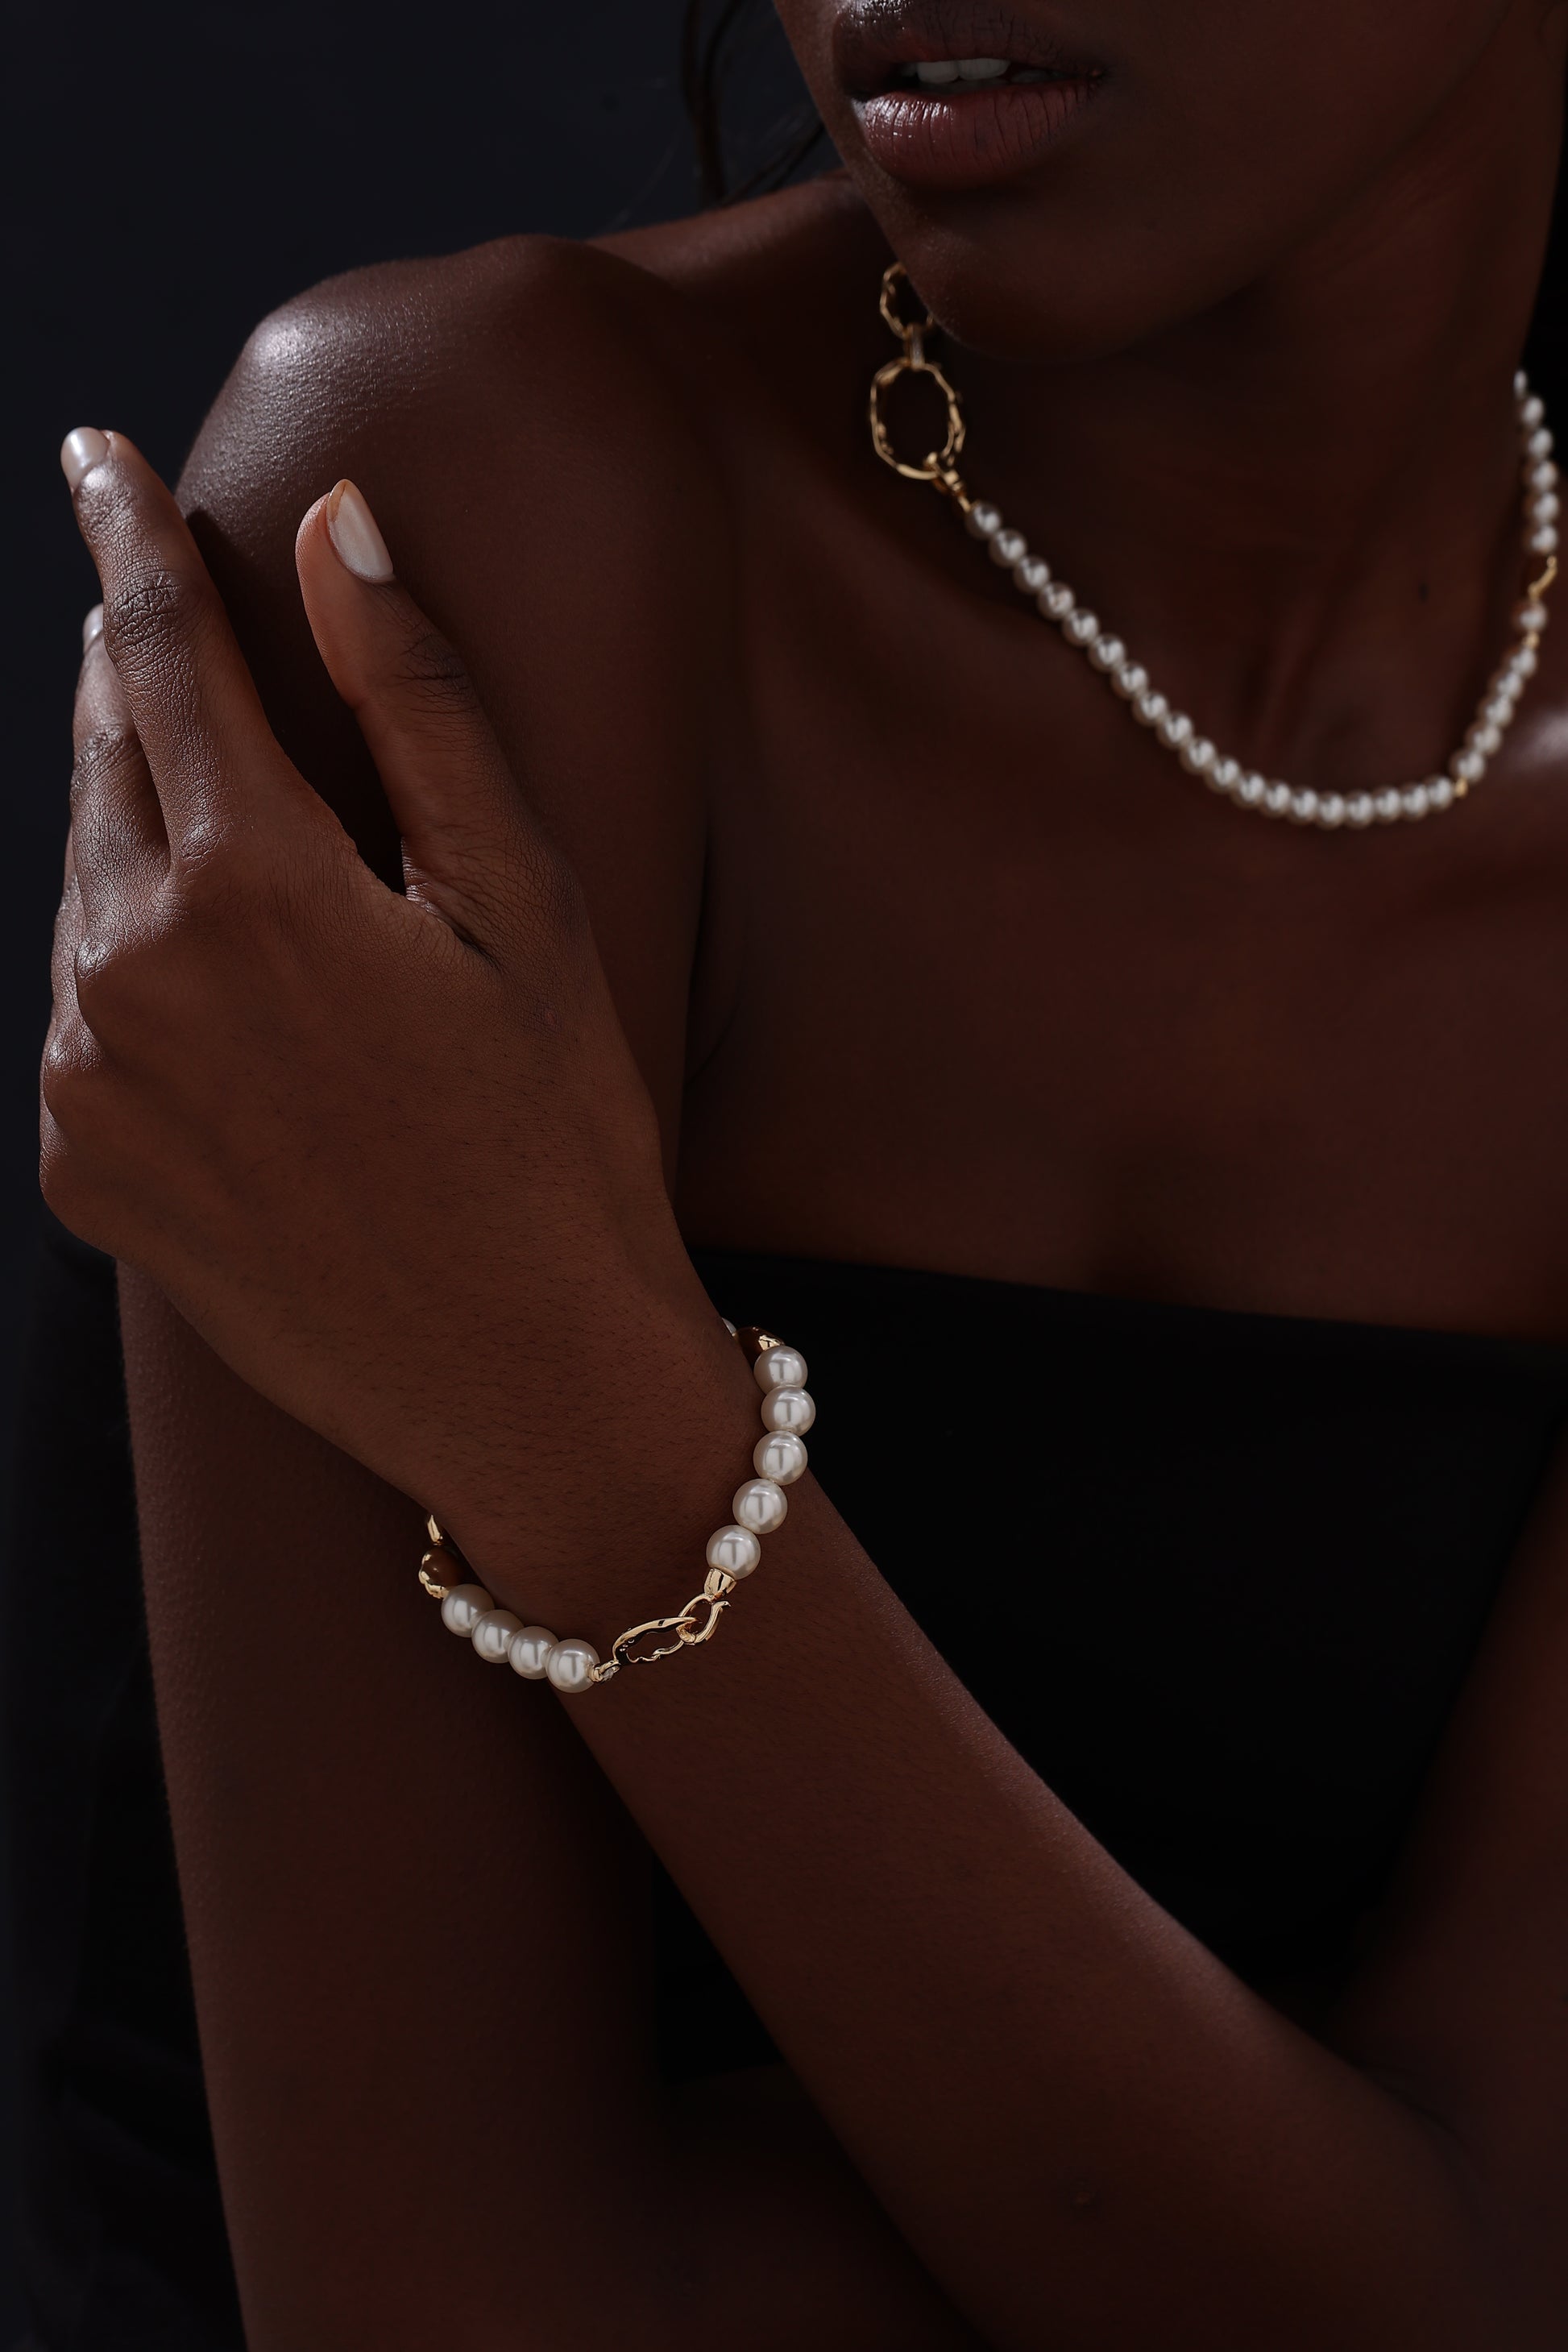 Pearl Beaded Bracelet - 18K Gold Plated - Bracelet - ONNNIII